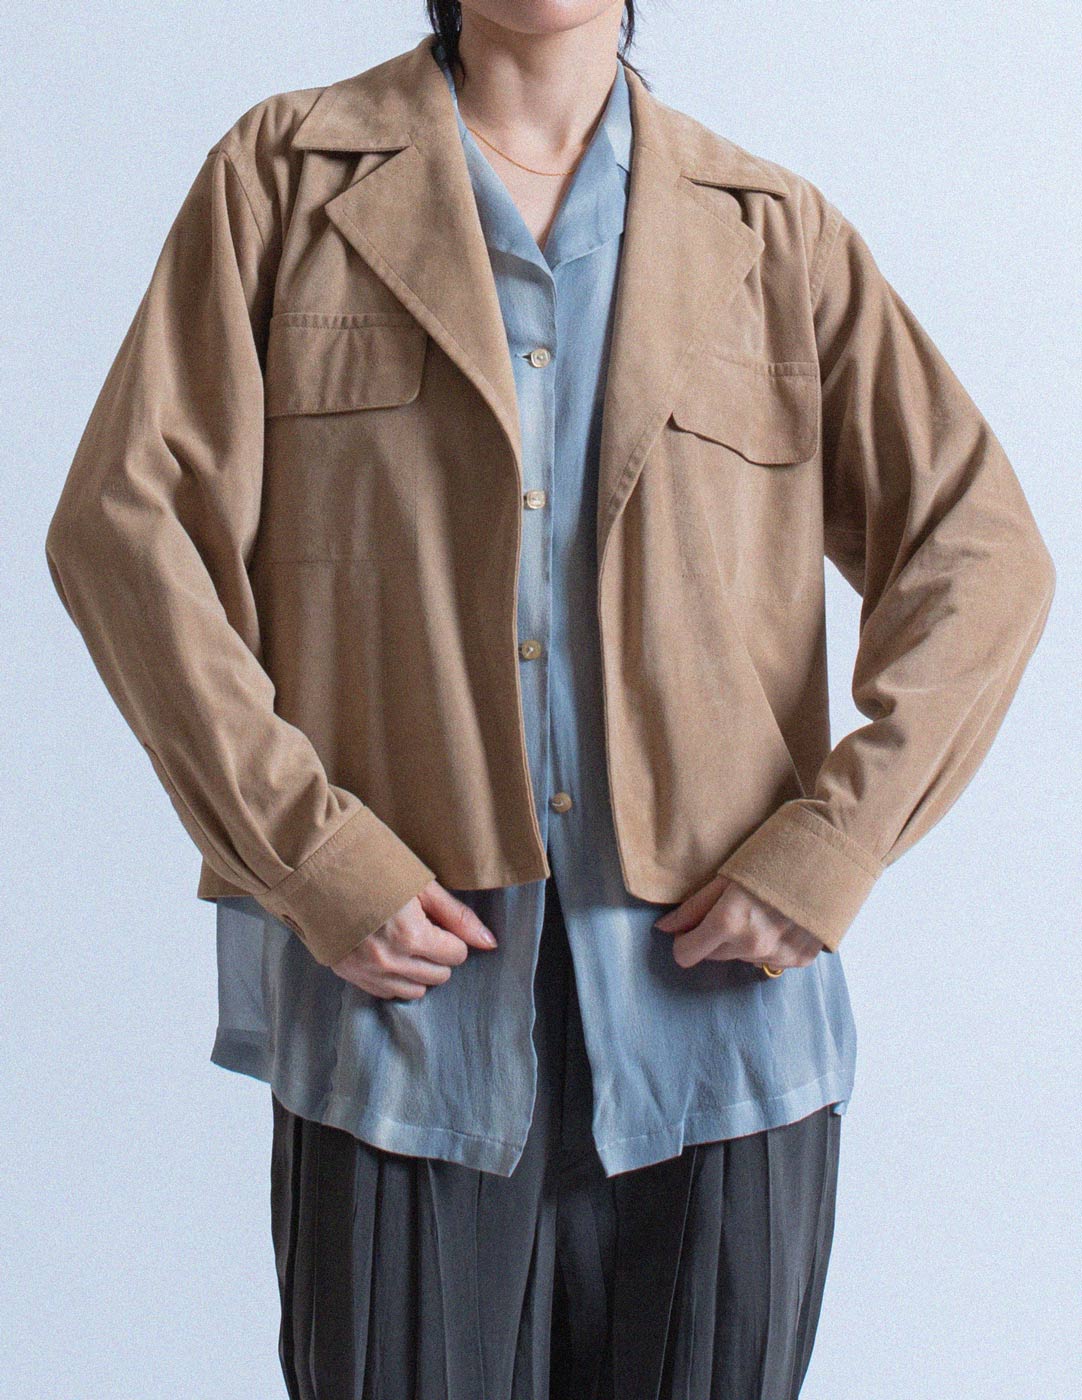 Yves Saint Laurent vintage tan suede jacket detail